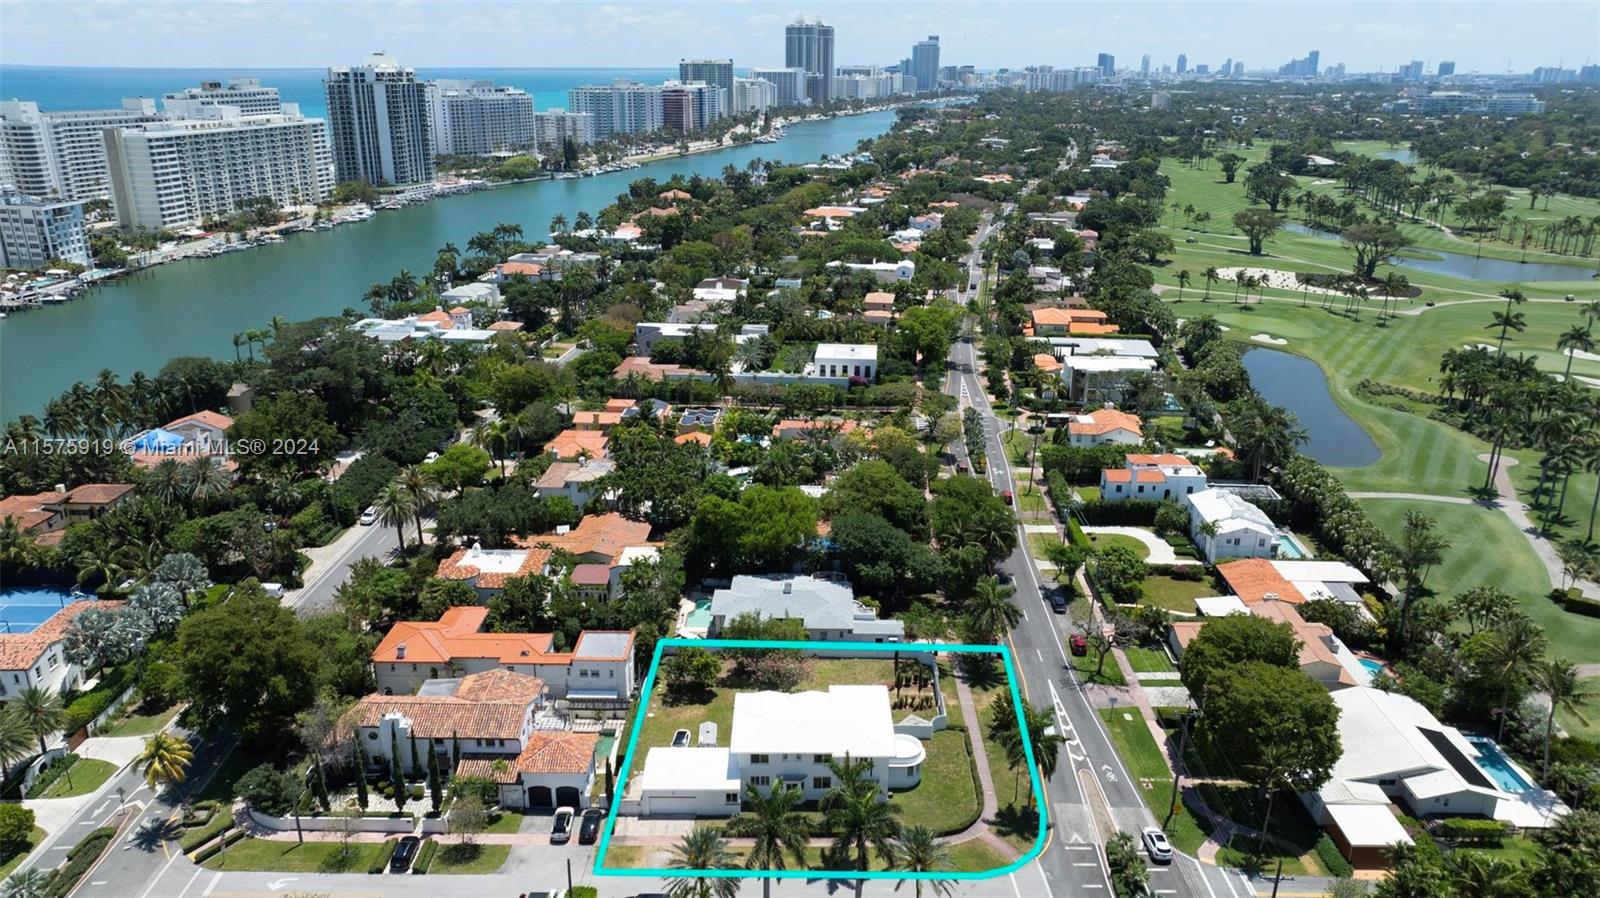 Property for Sale at 5861 La Gorce Dr, Miami Beach, Miami-Dade County, Florida - Bedrooms: 4 
Bathrooms: 4  - $8,100,000